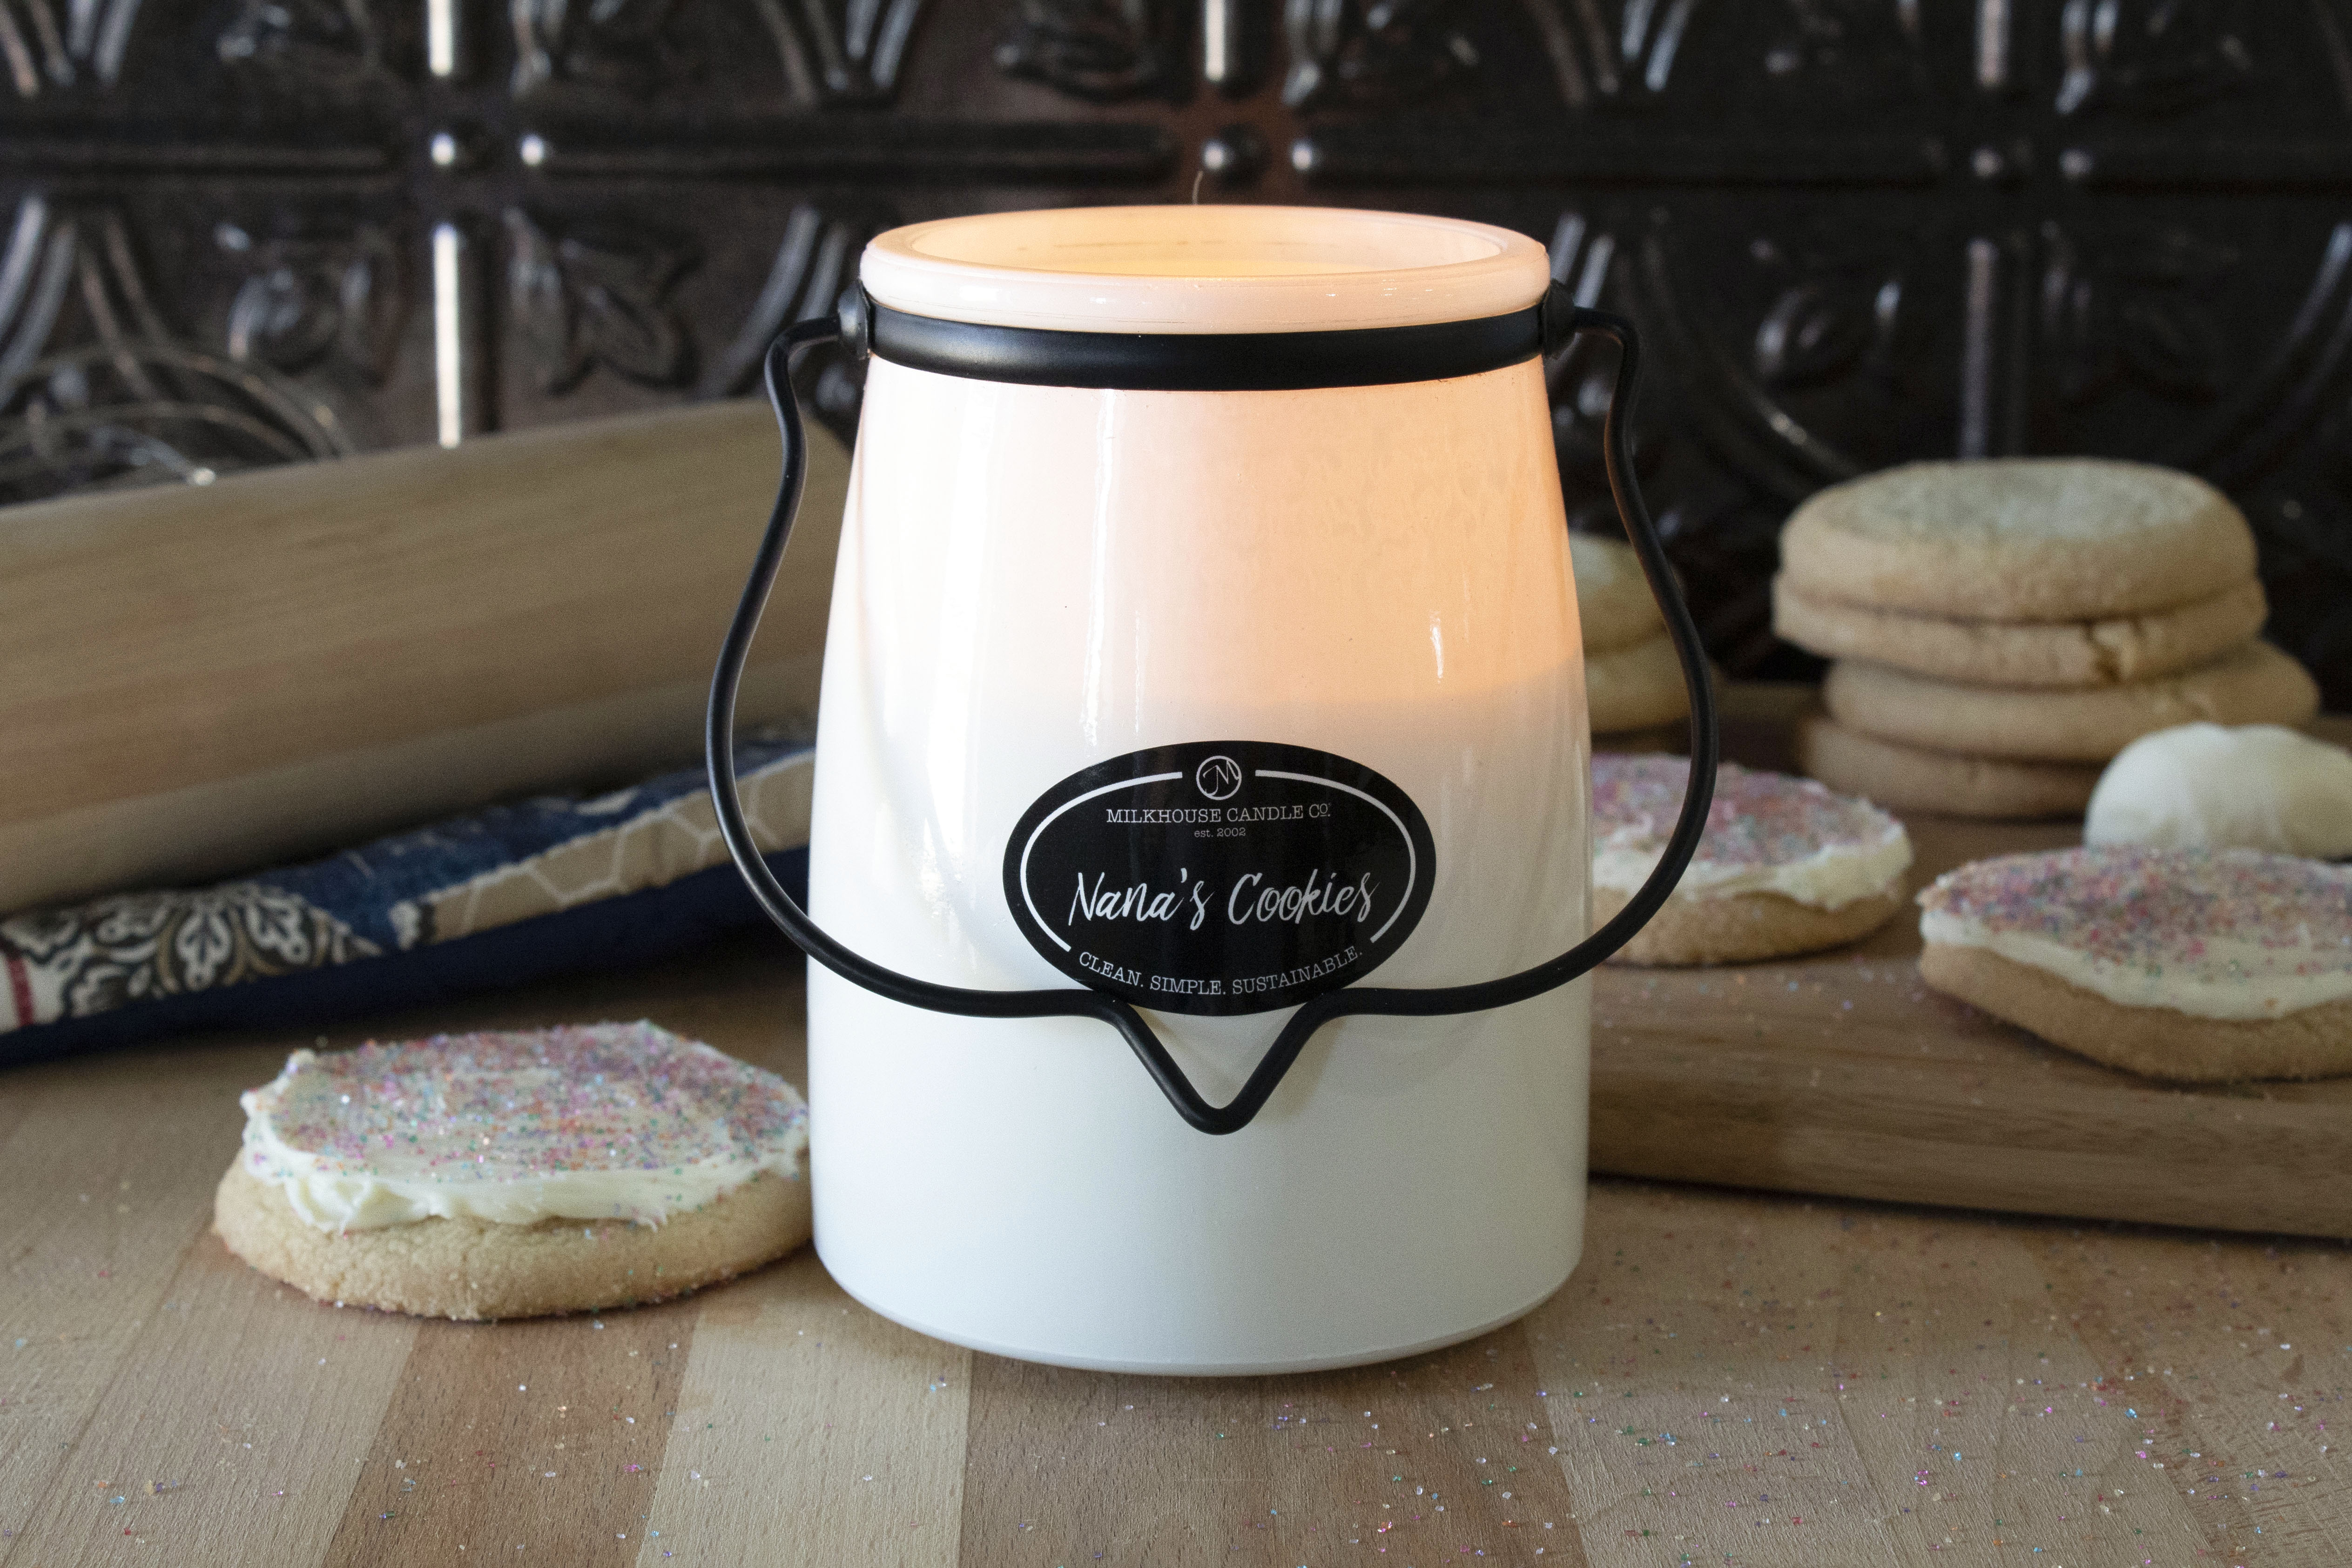 Milkhouse Candles Butter Jar